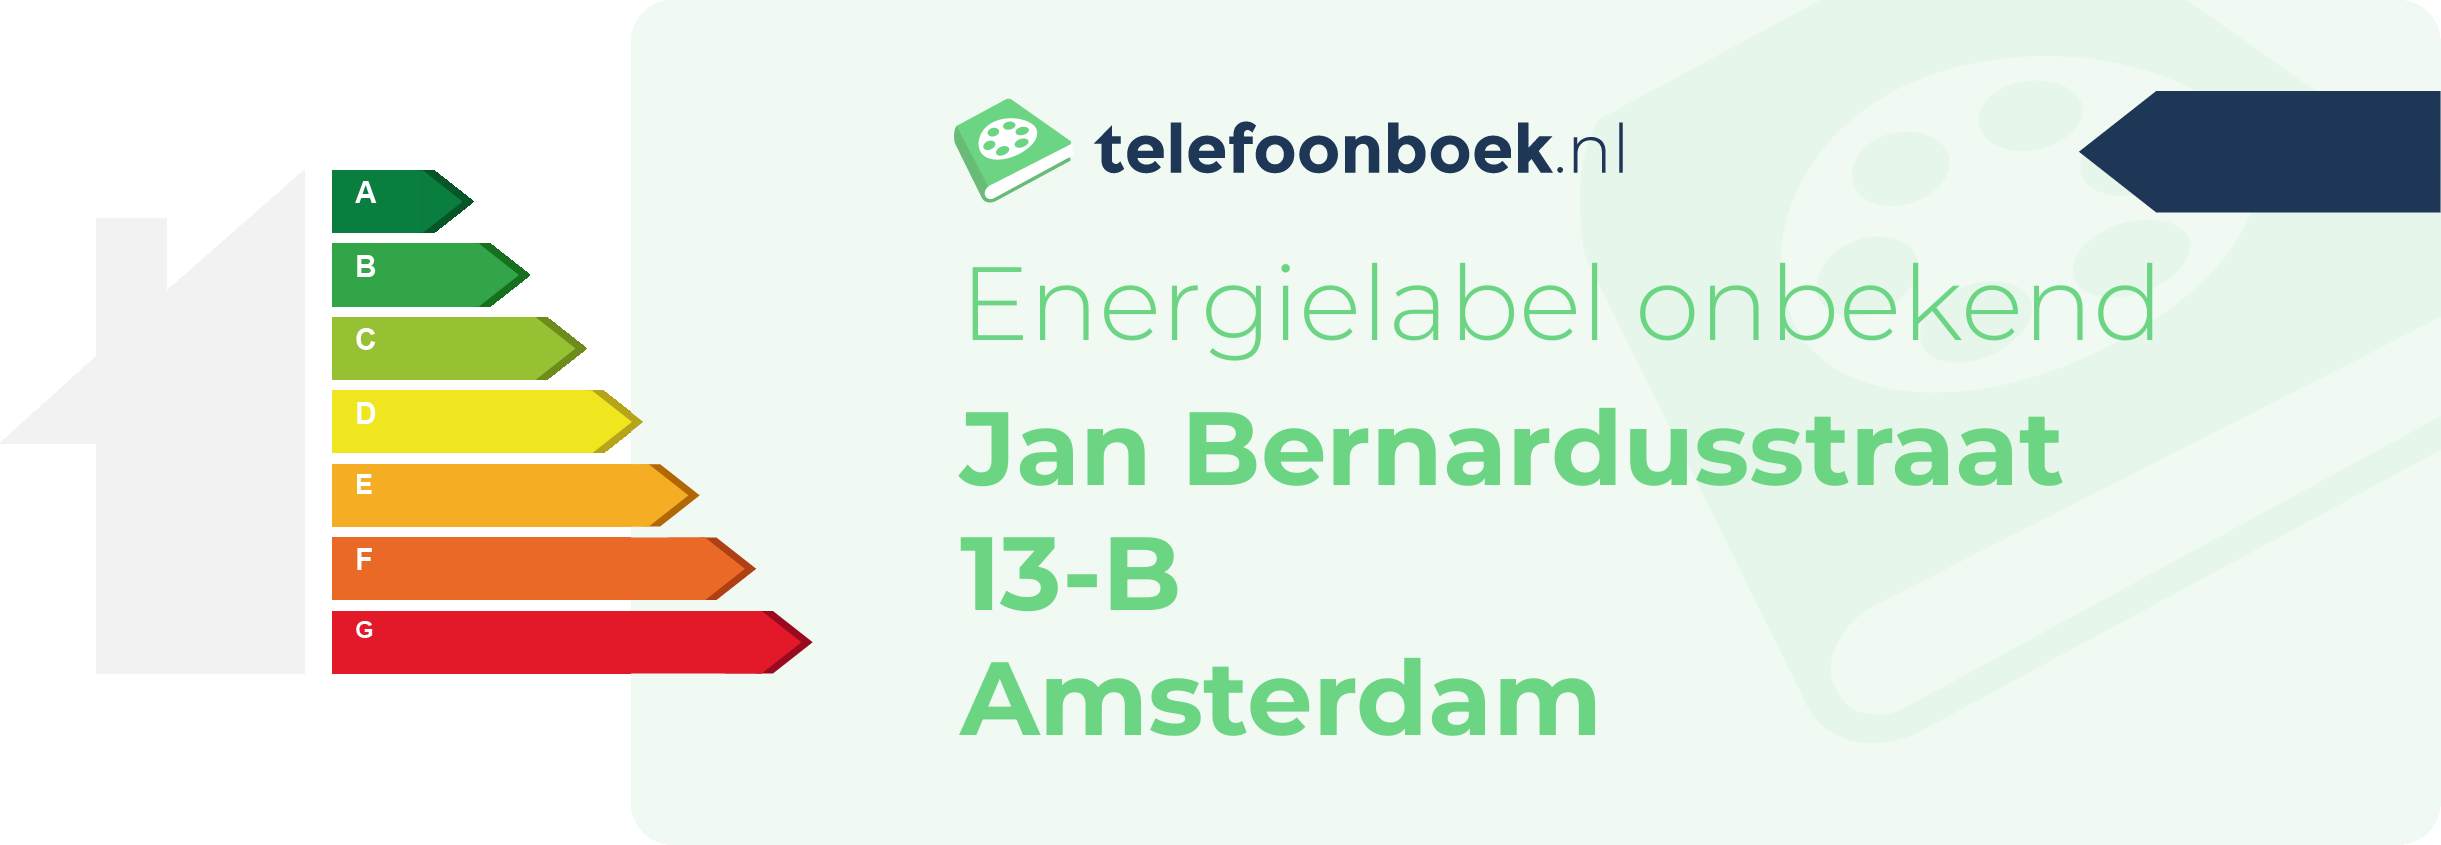 Energielabel Jan Bernardusstraat 13-B Amsterdam